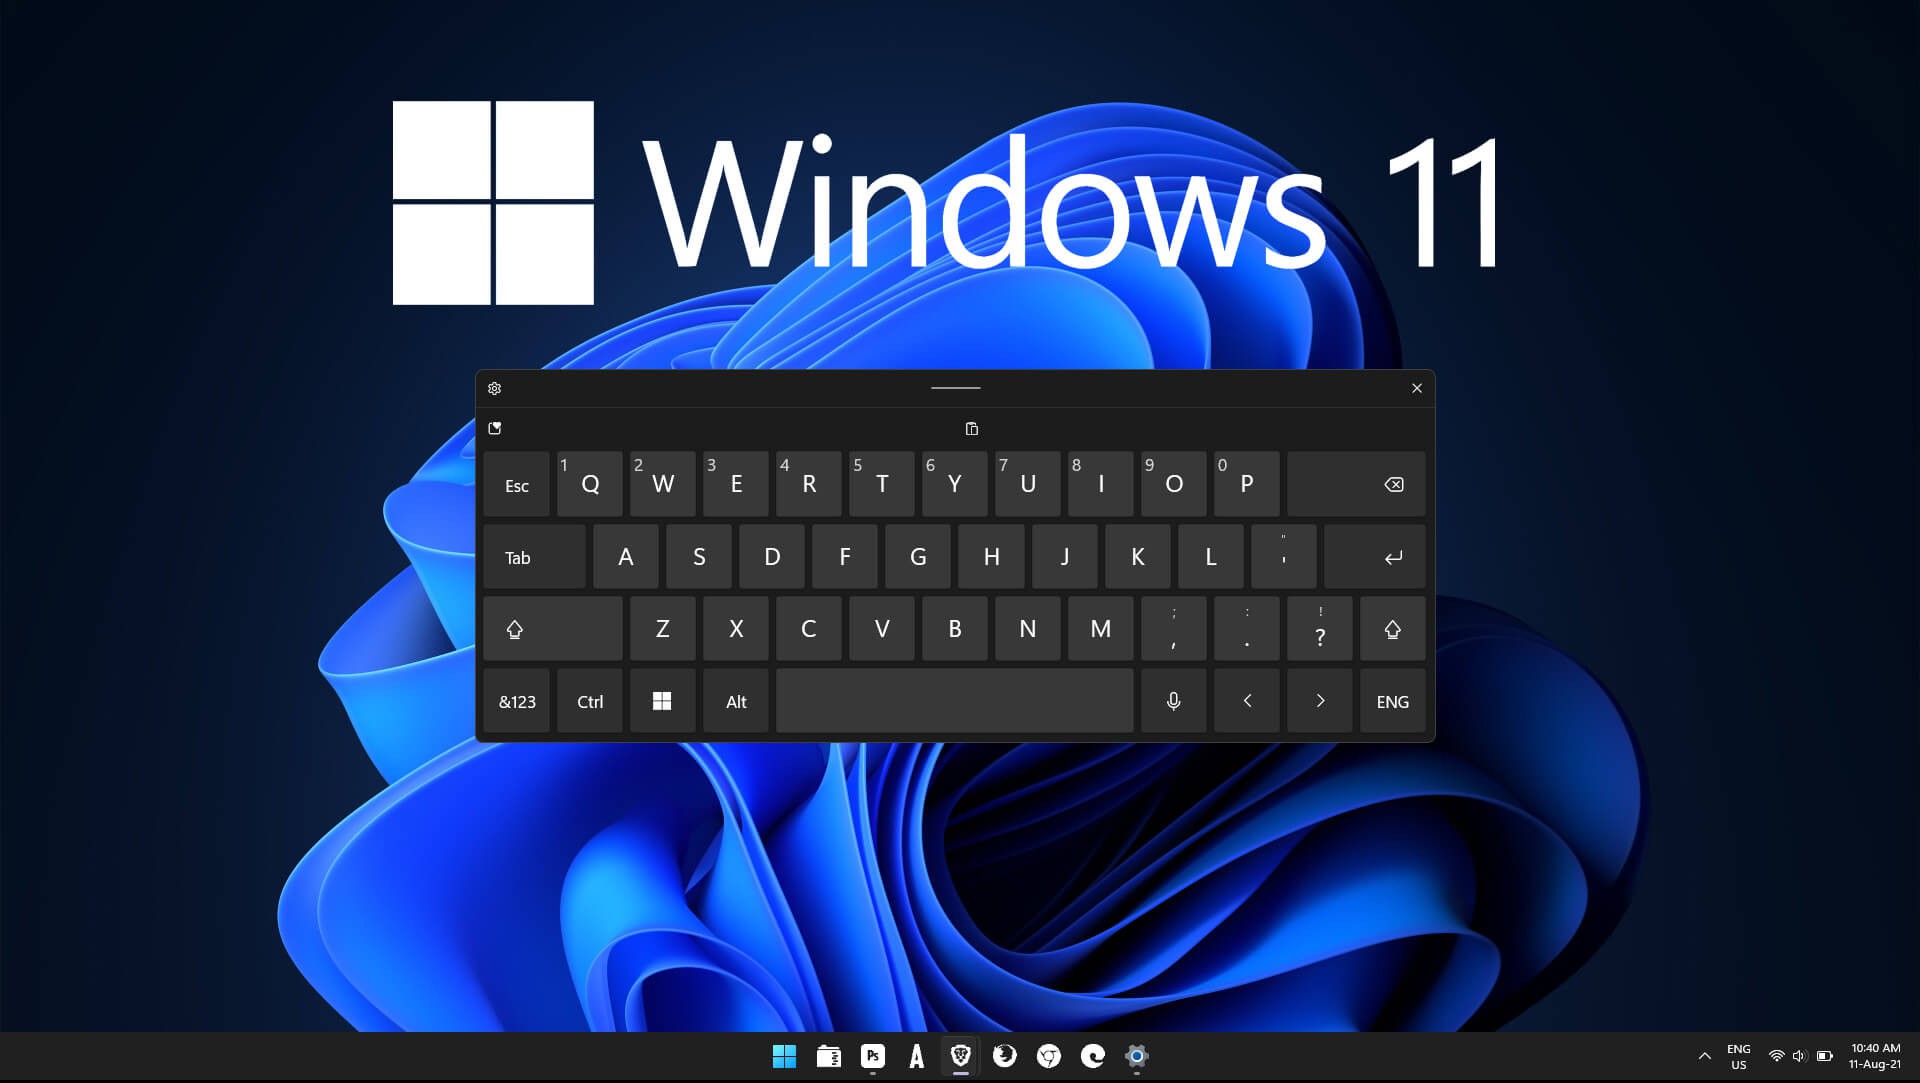 Windows 11 Logo Keyboard